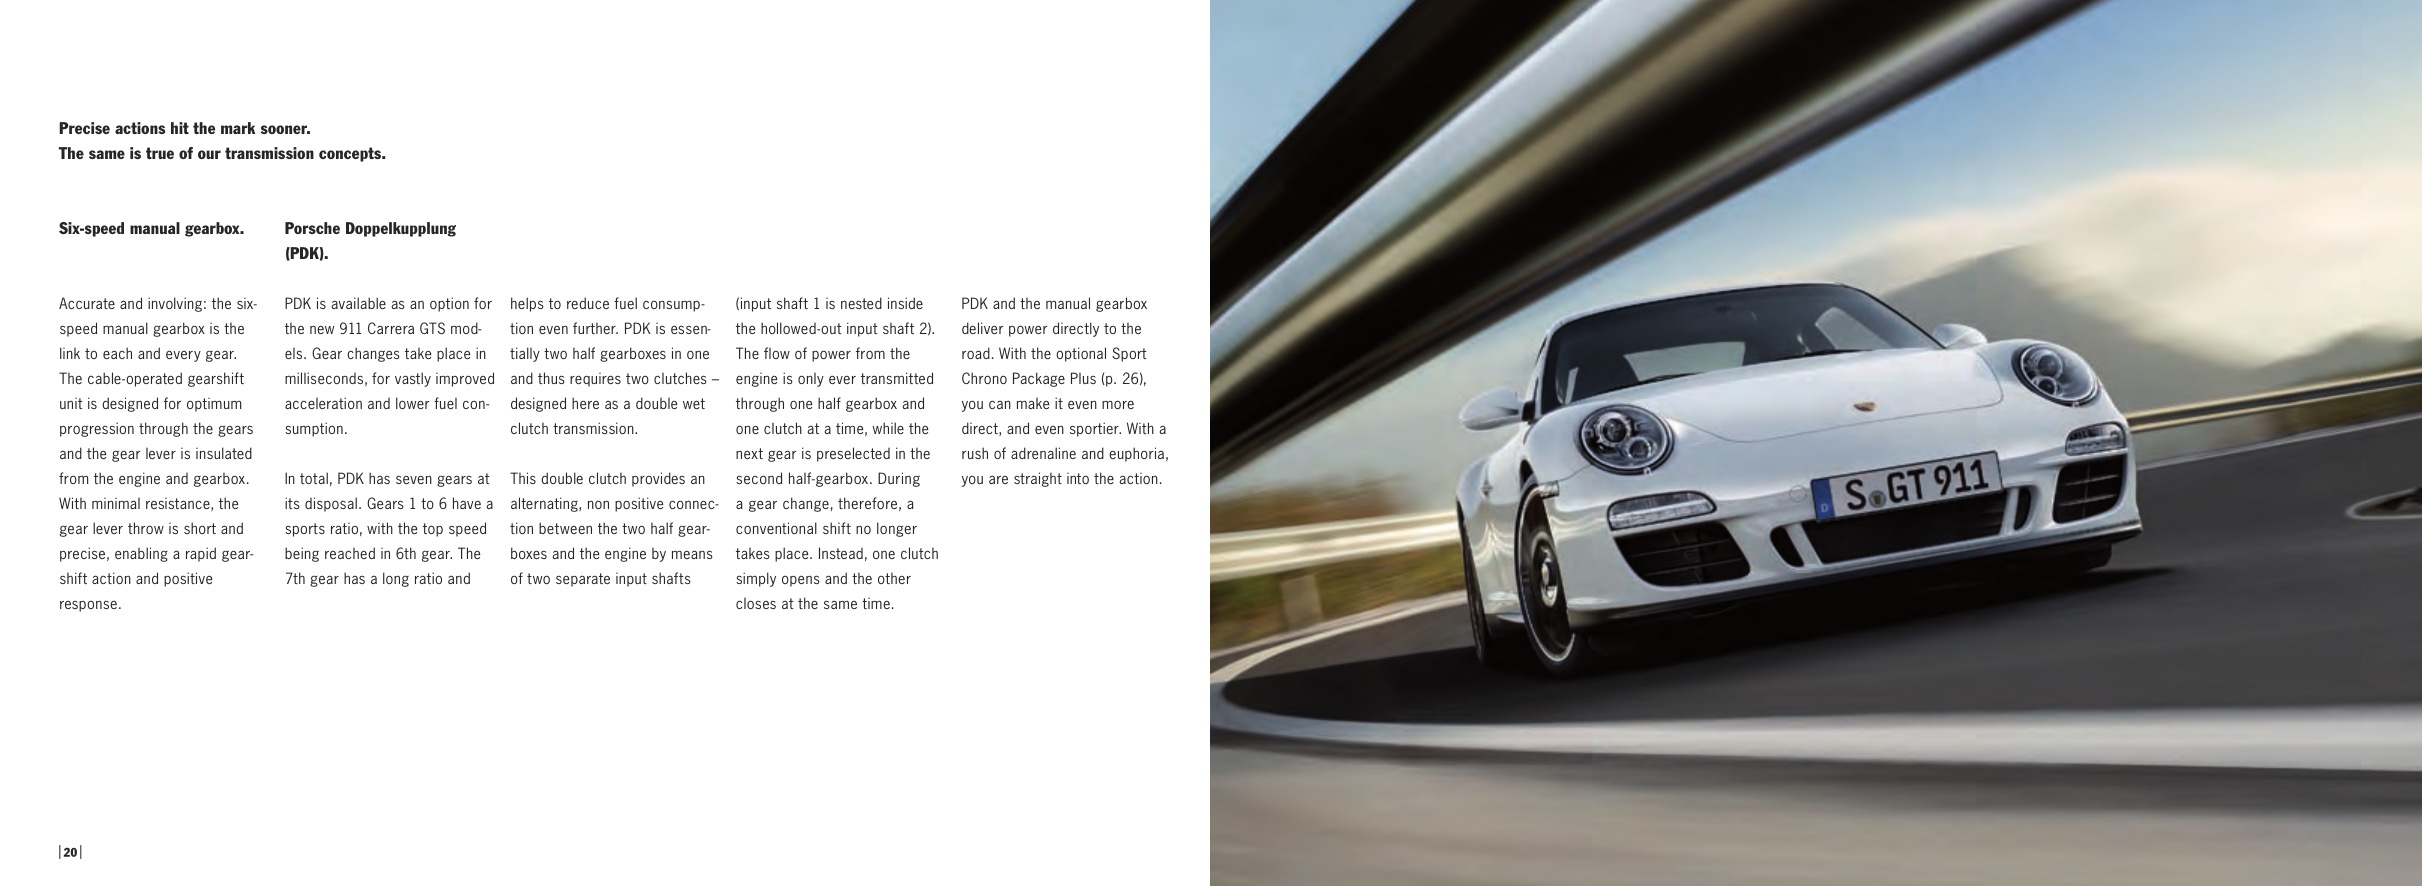 2011 Porsche 911 GTS Brochure Page 25